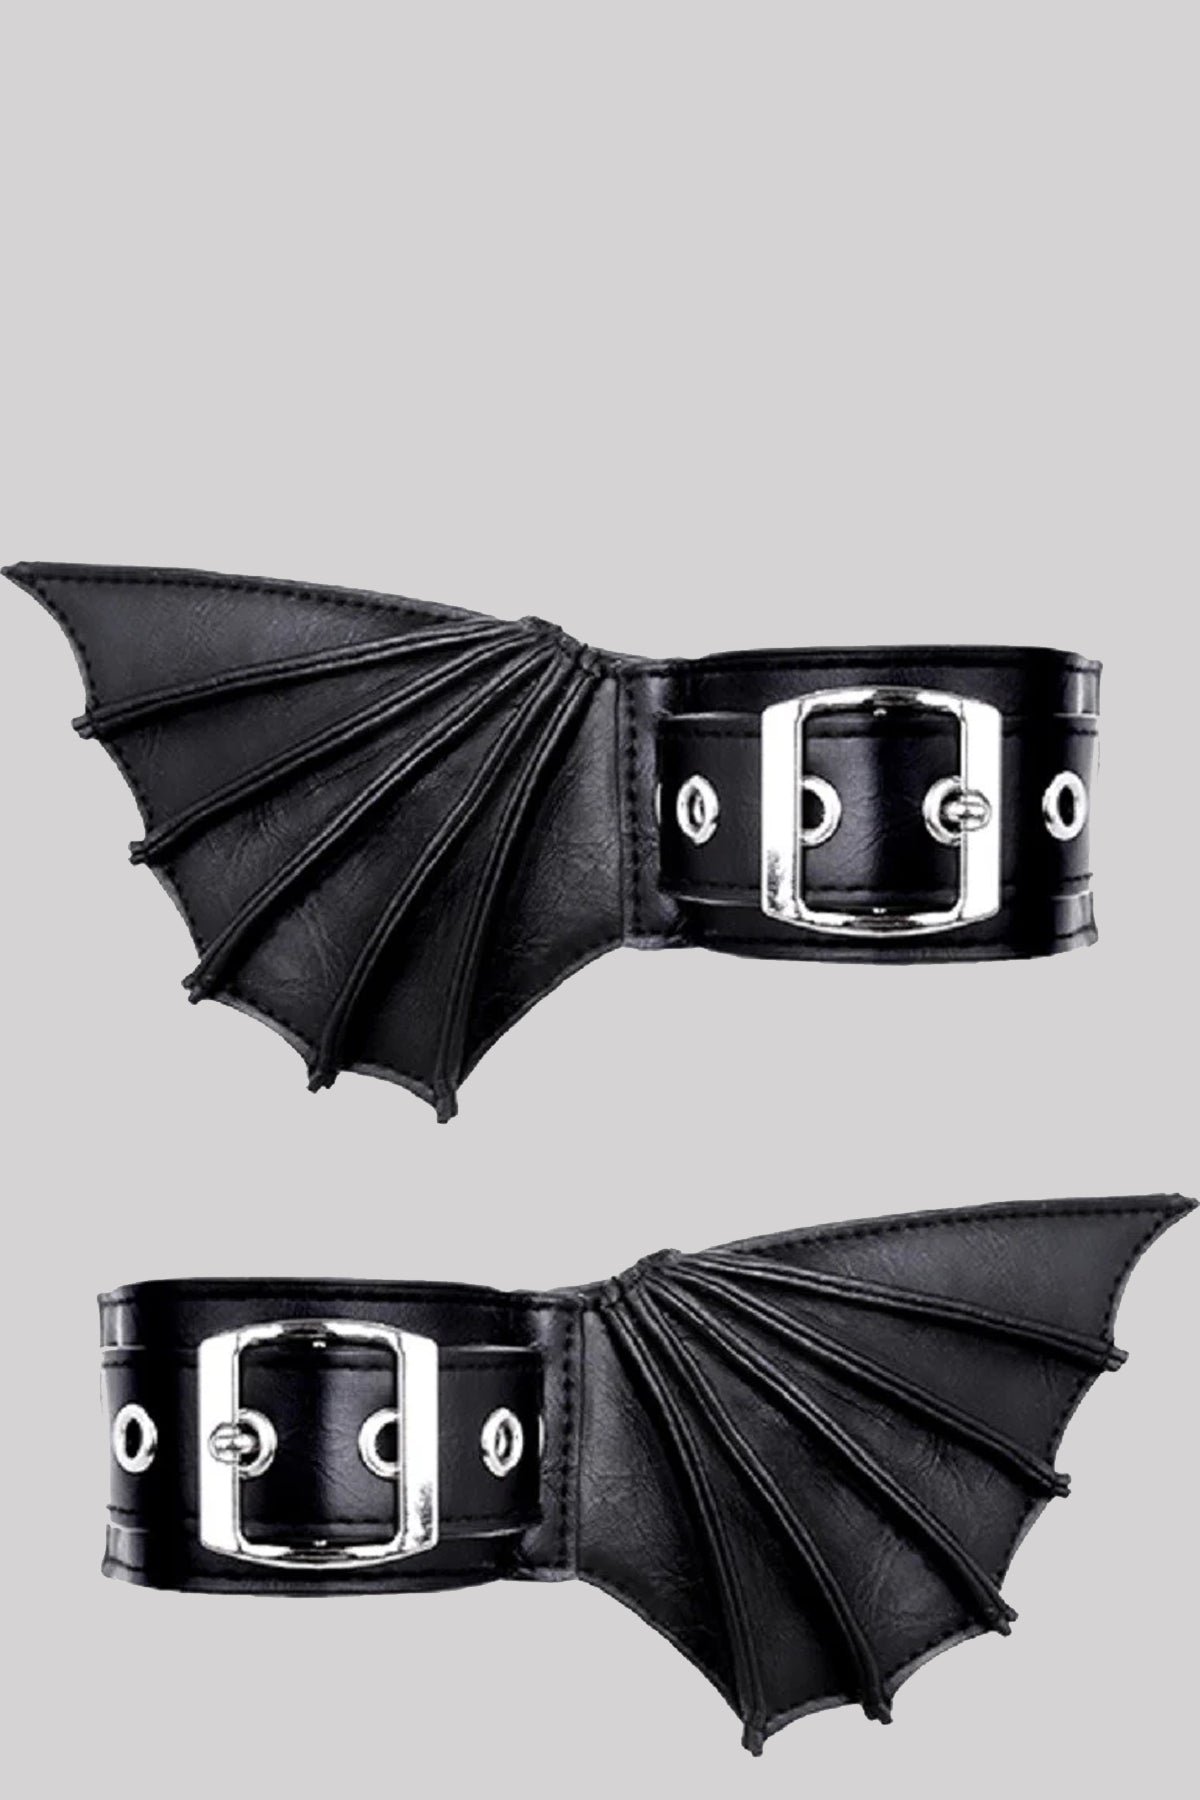 Restyle Bat Ankle Cuffs Wristbands Bracelets Vegan Leather